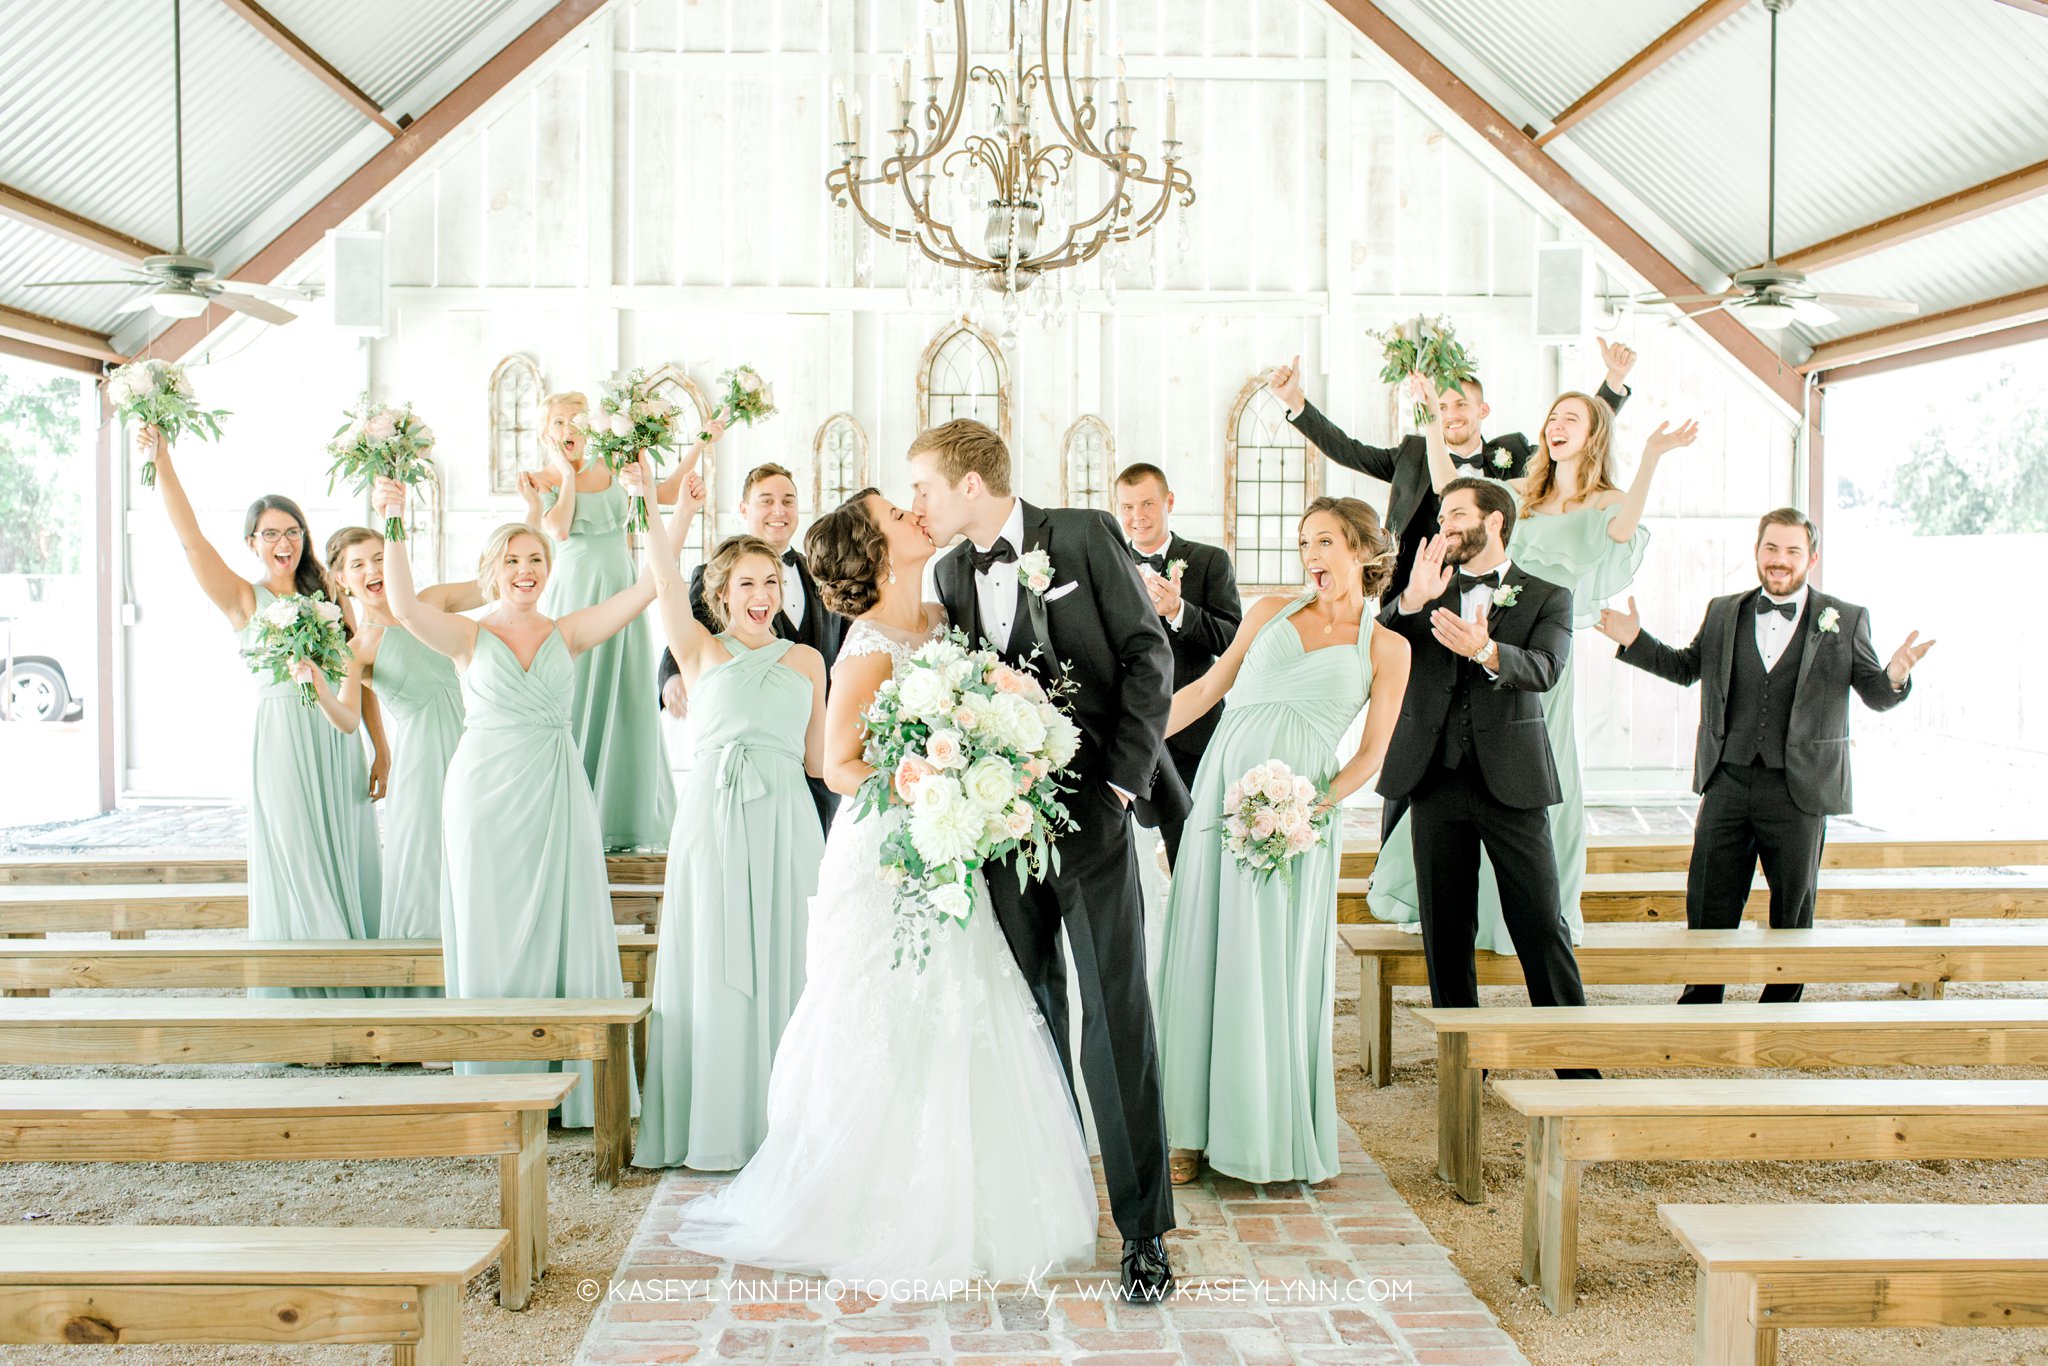 Houston wedding photographer / Kasey Lynn Photography